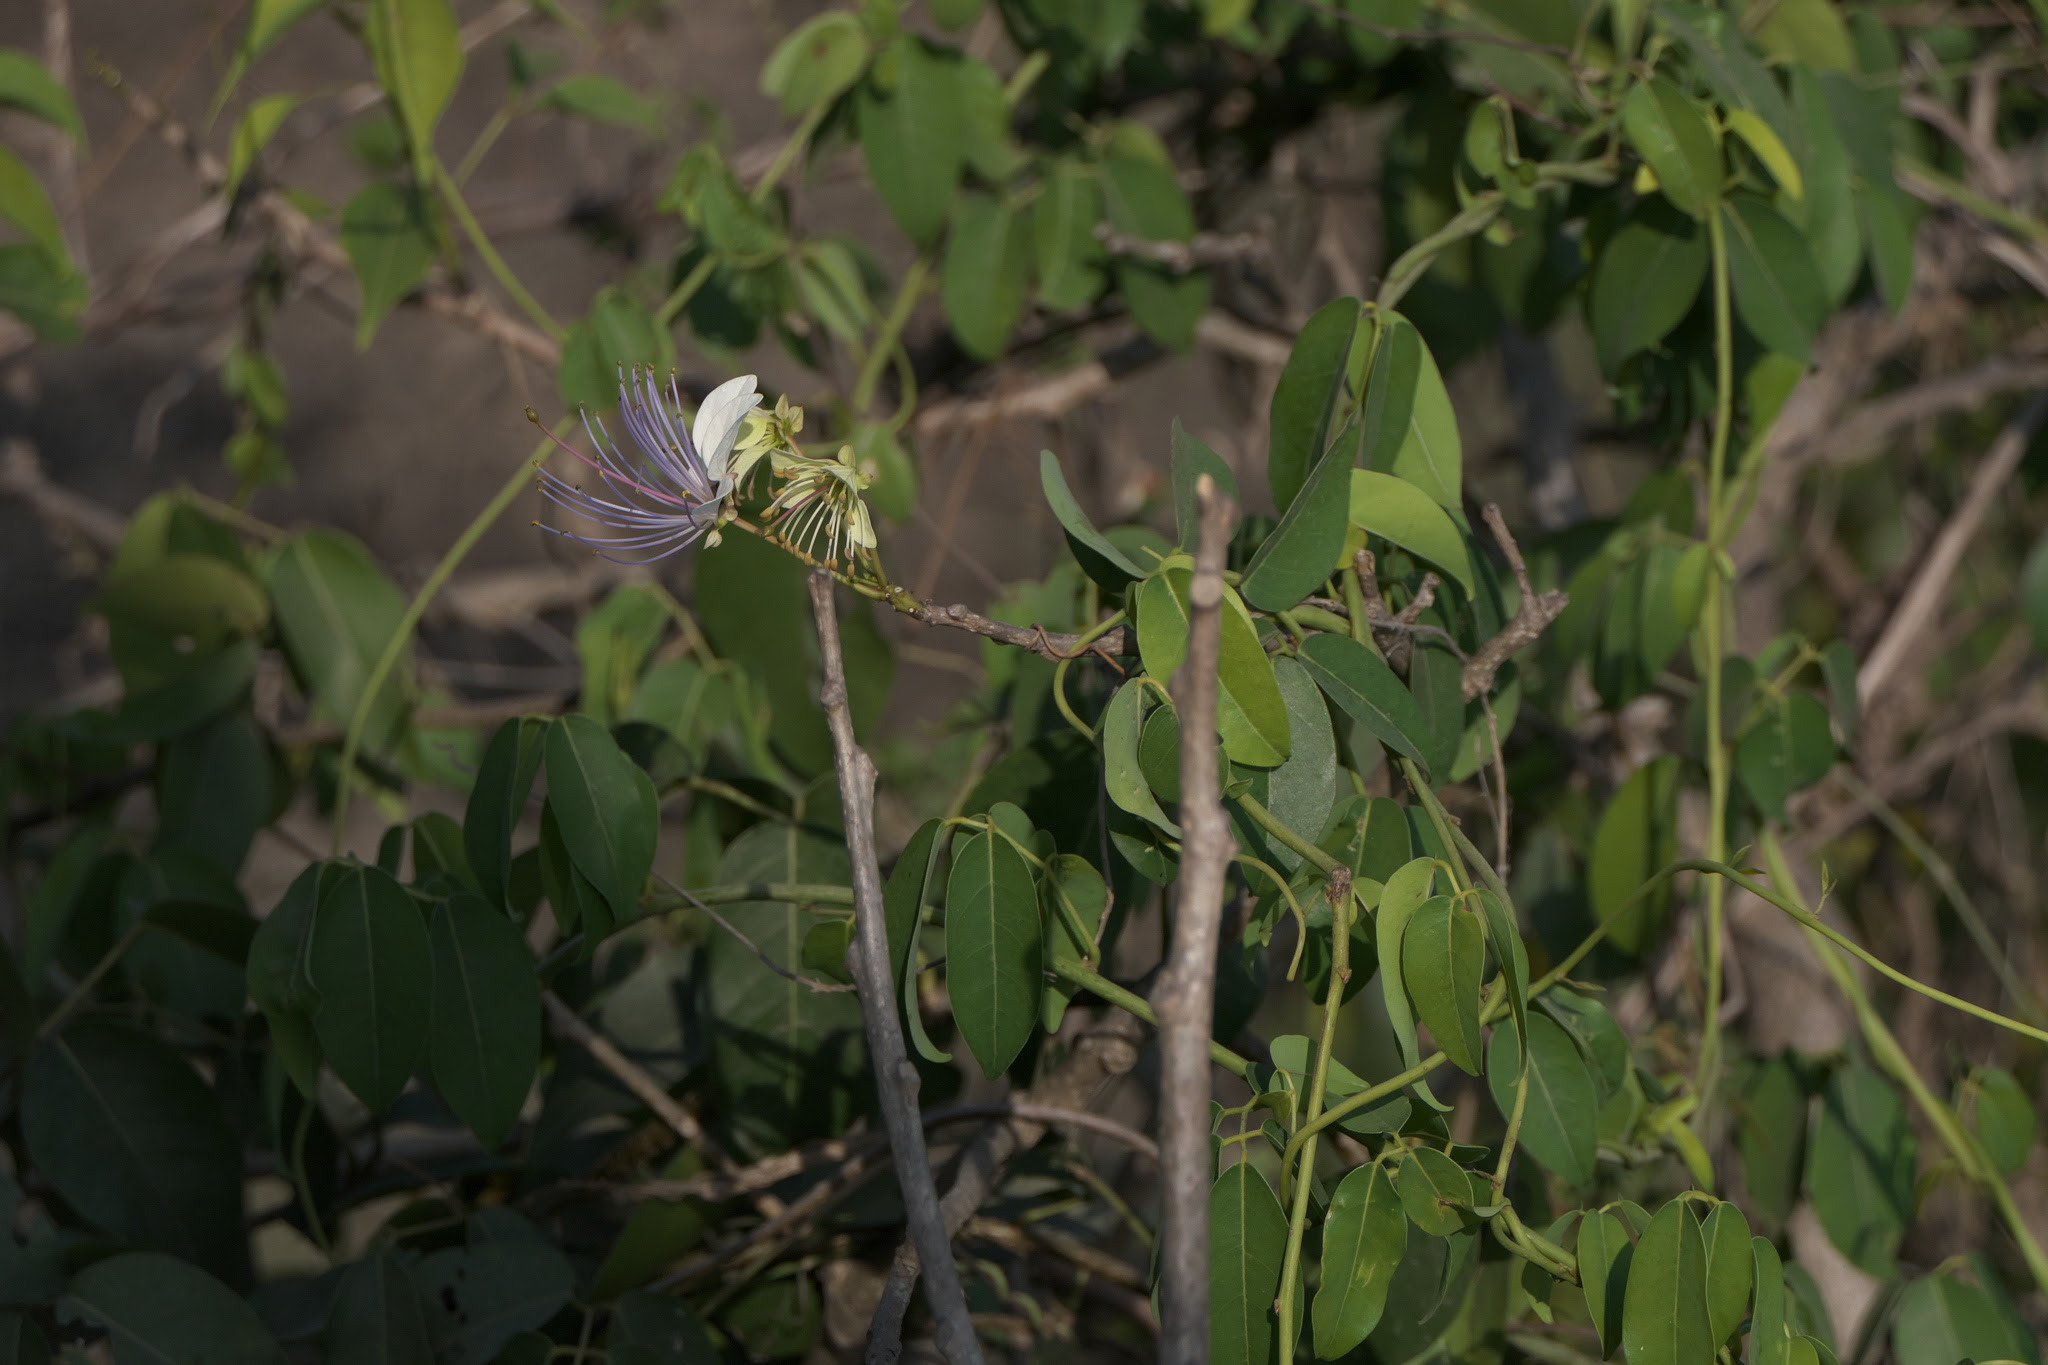 Crateva adansonii subsp. odora (Buch.-Ham.) Jacobs ... FOR VALIDATION